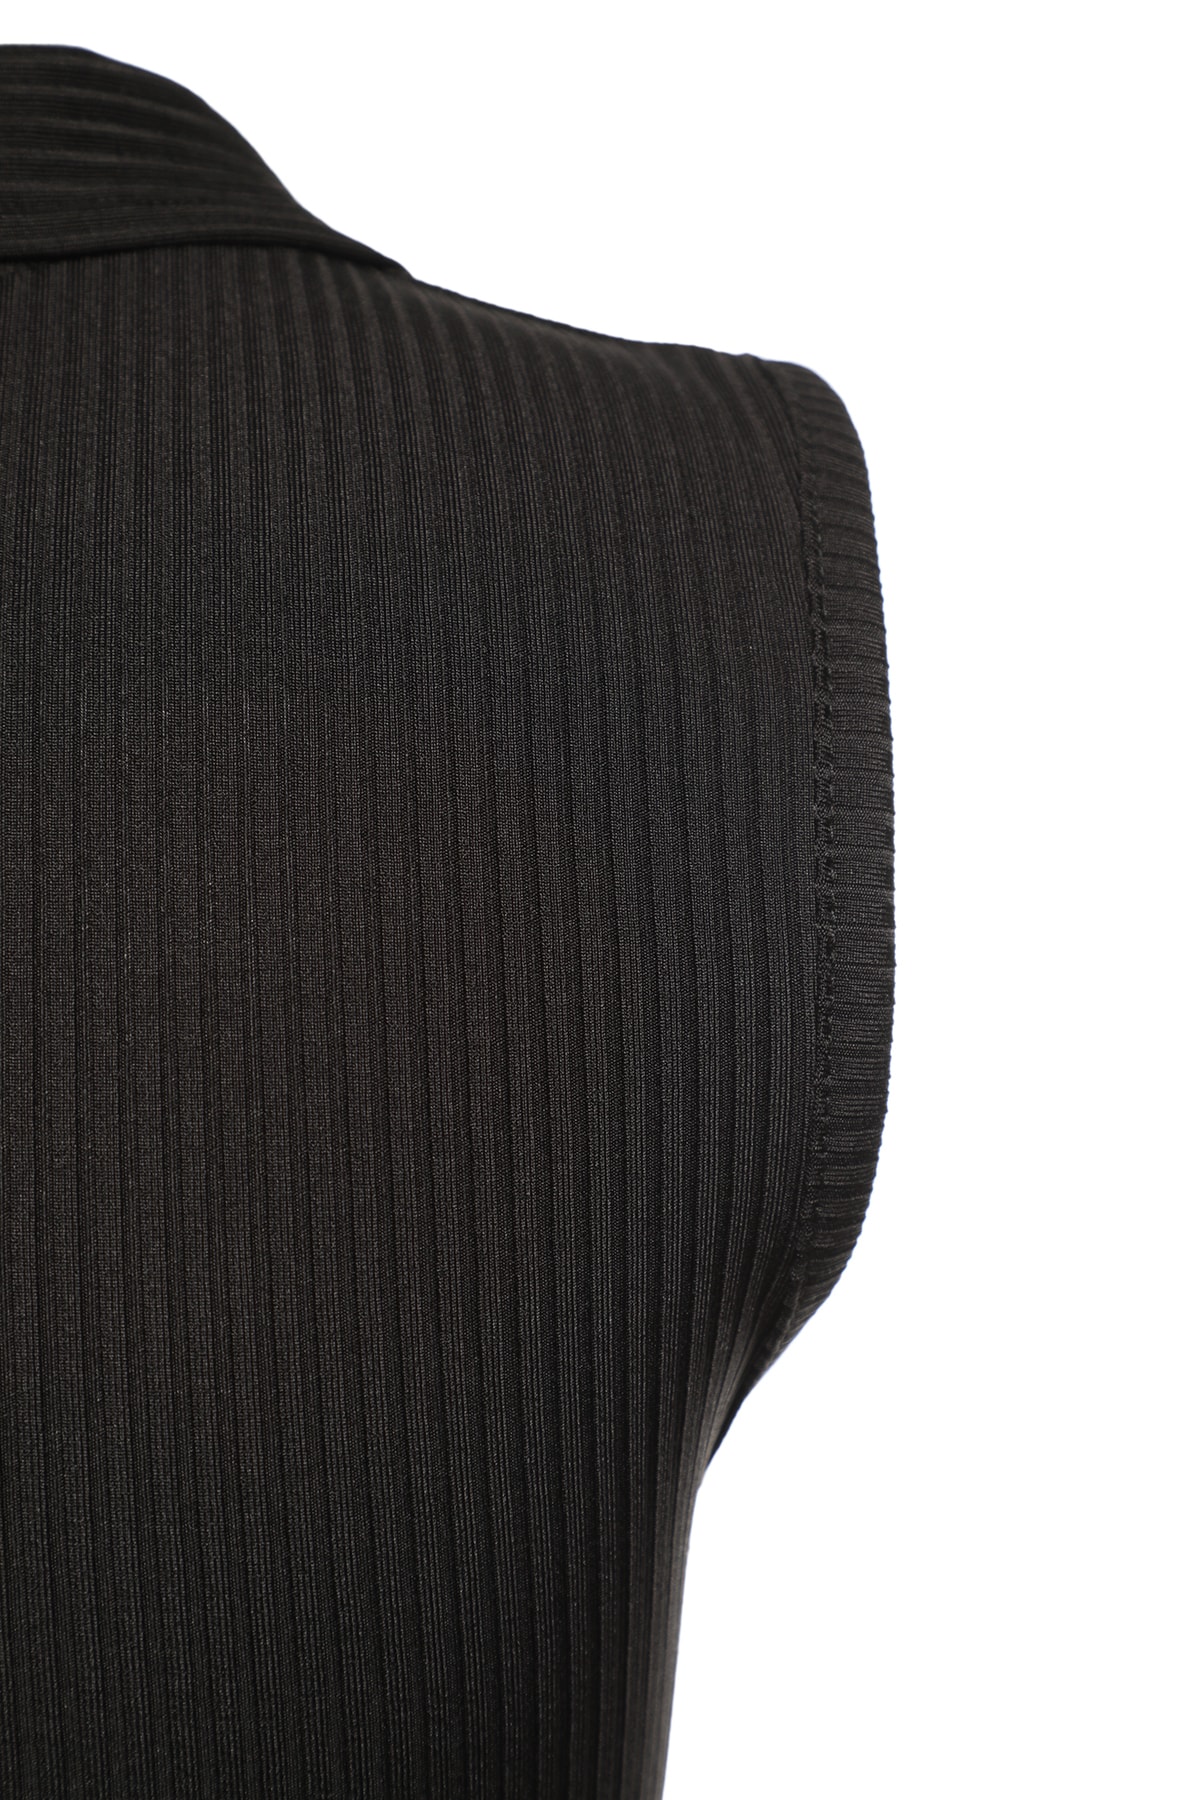 Siyah Fitted/Vücuda Oturan Polo Yaka Crop Esnek Örme Bluz TWOSS22BZ0335